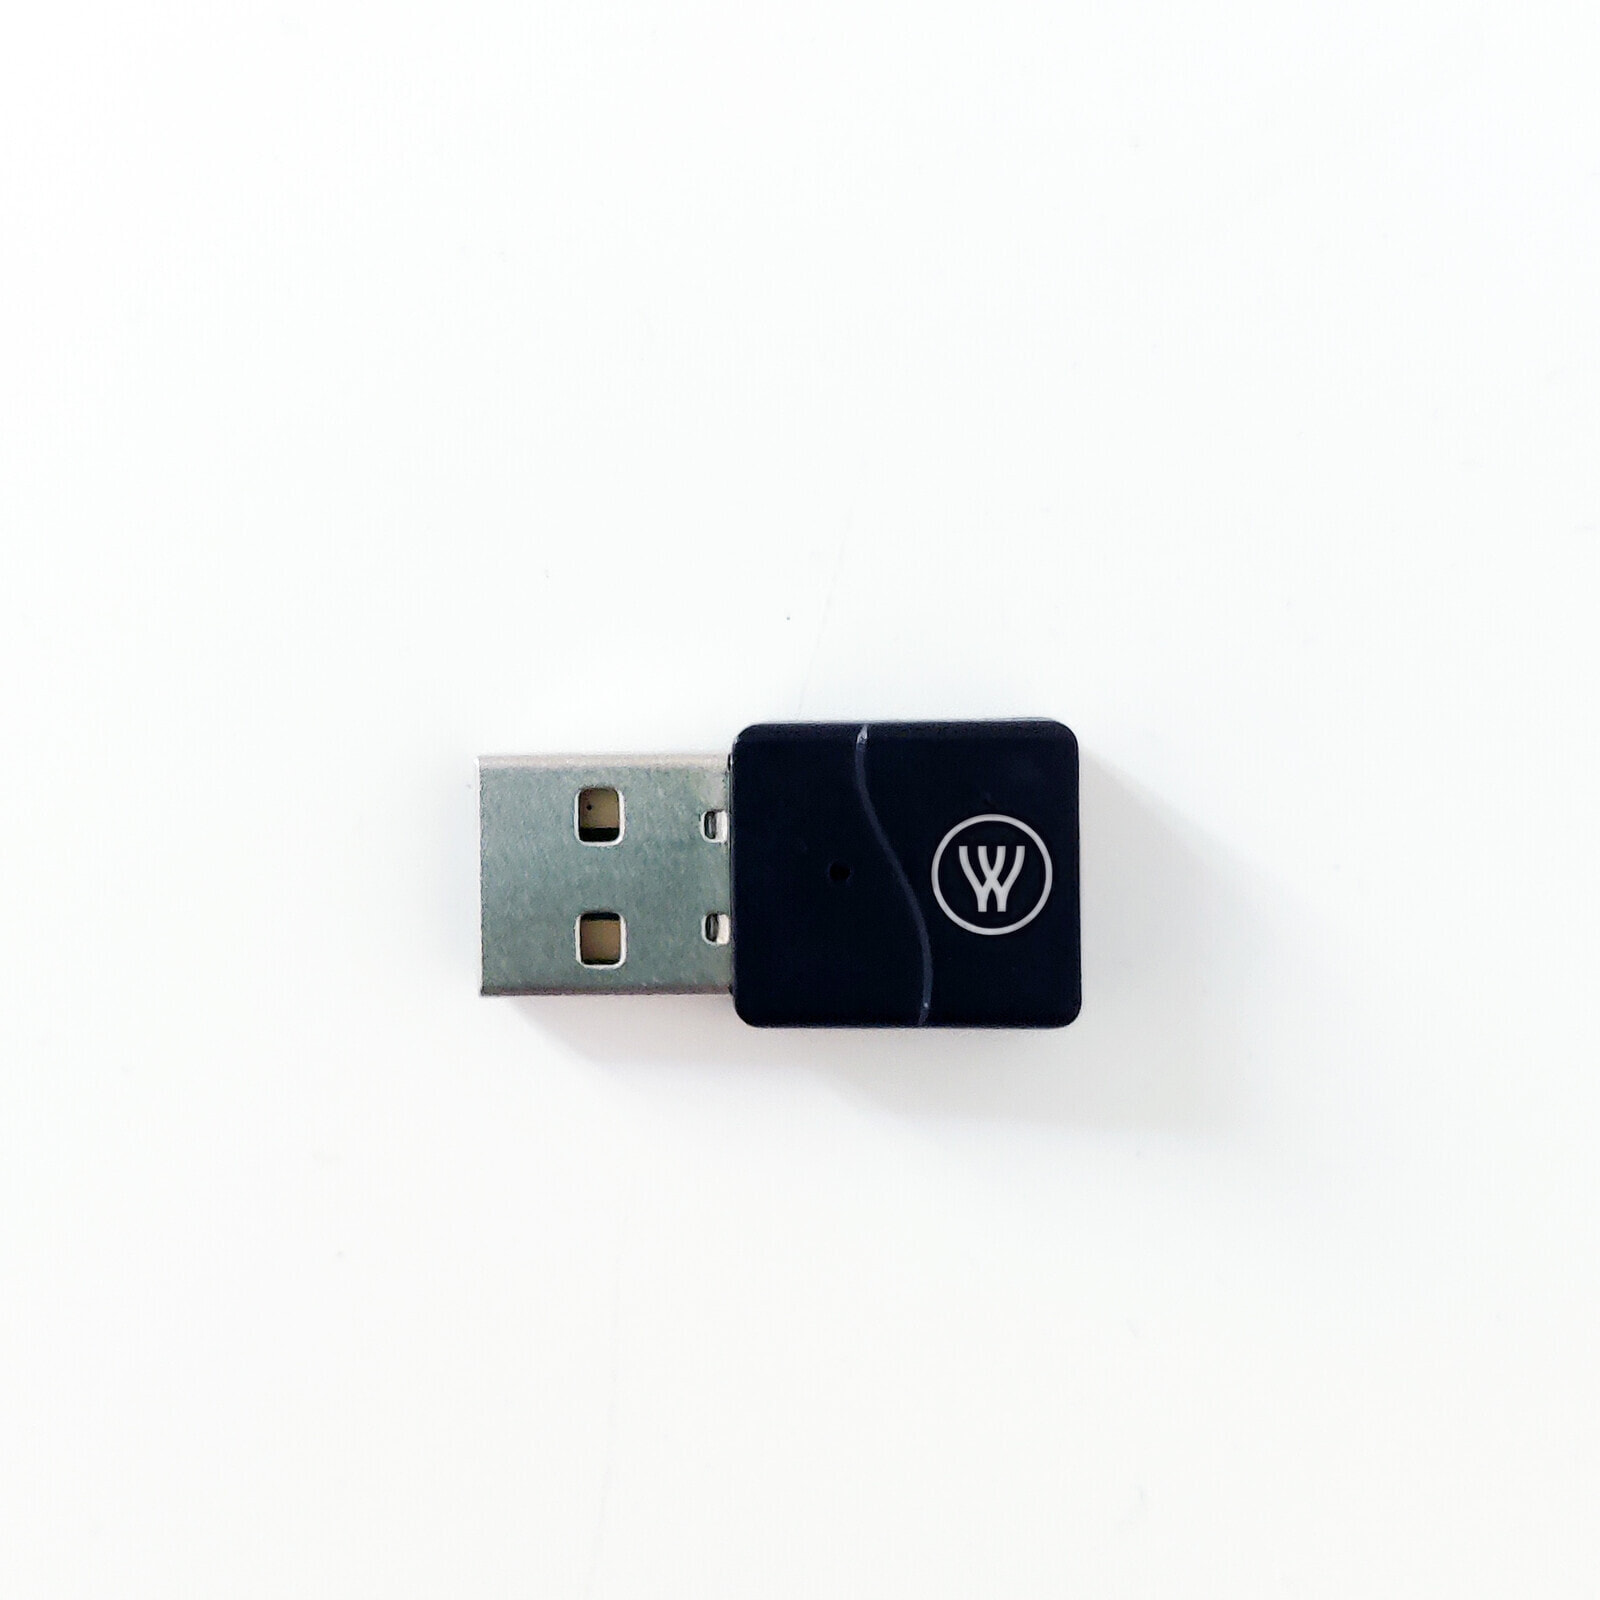 OROSOUND USB BLUETOOTH ADAPTER - DONGLE